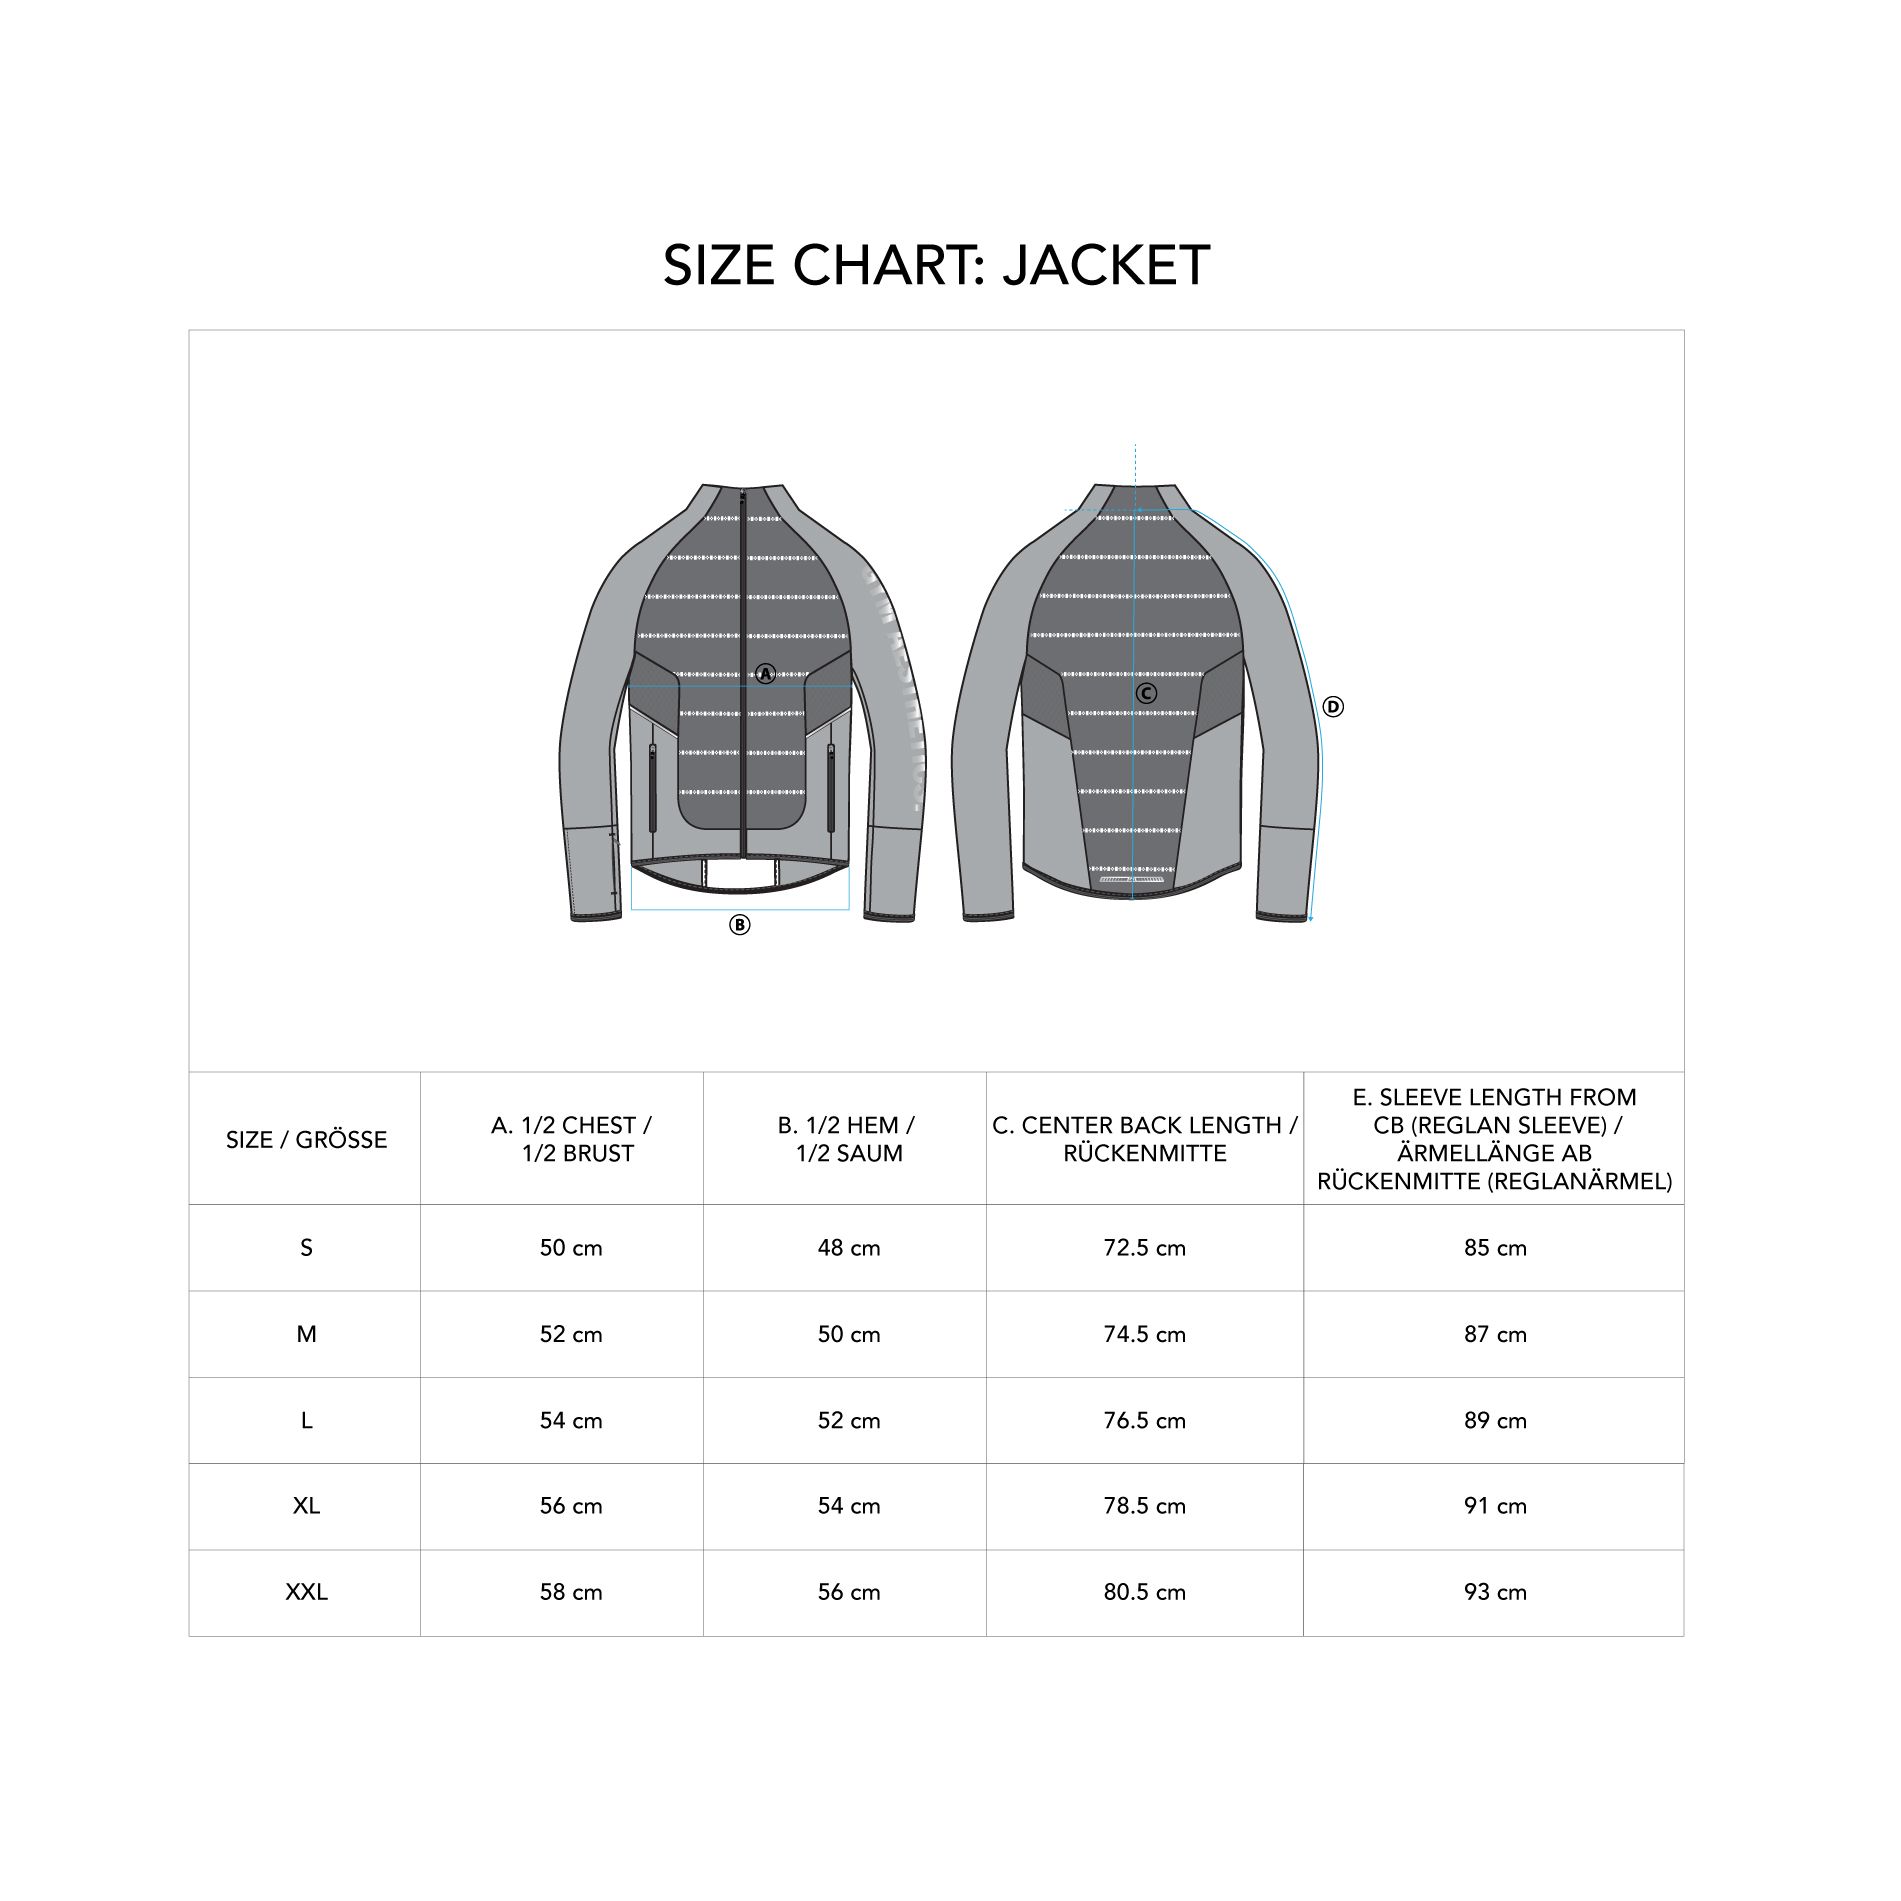 Ultrasonic 2.0 React Jacket for Men - size chart